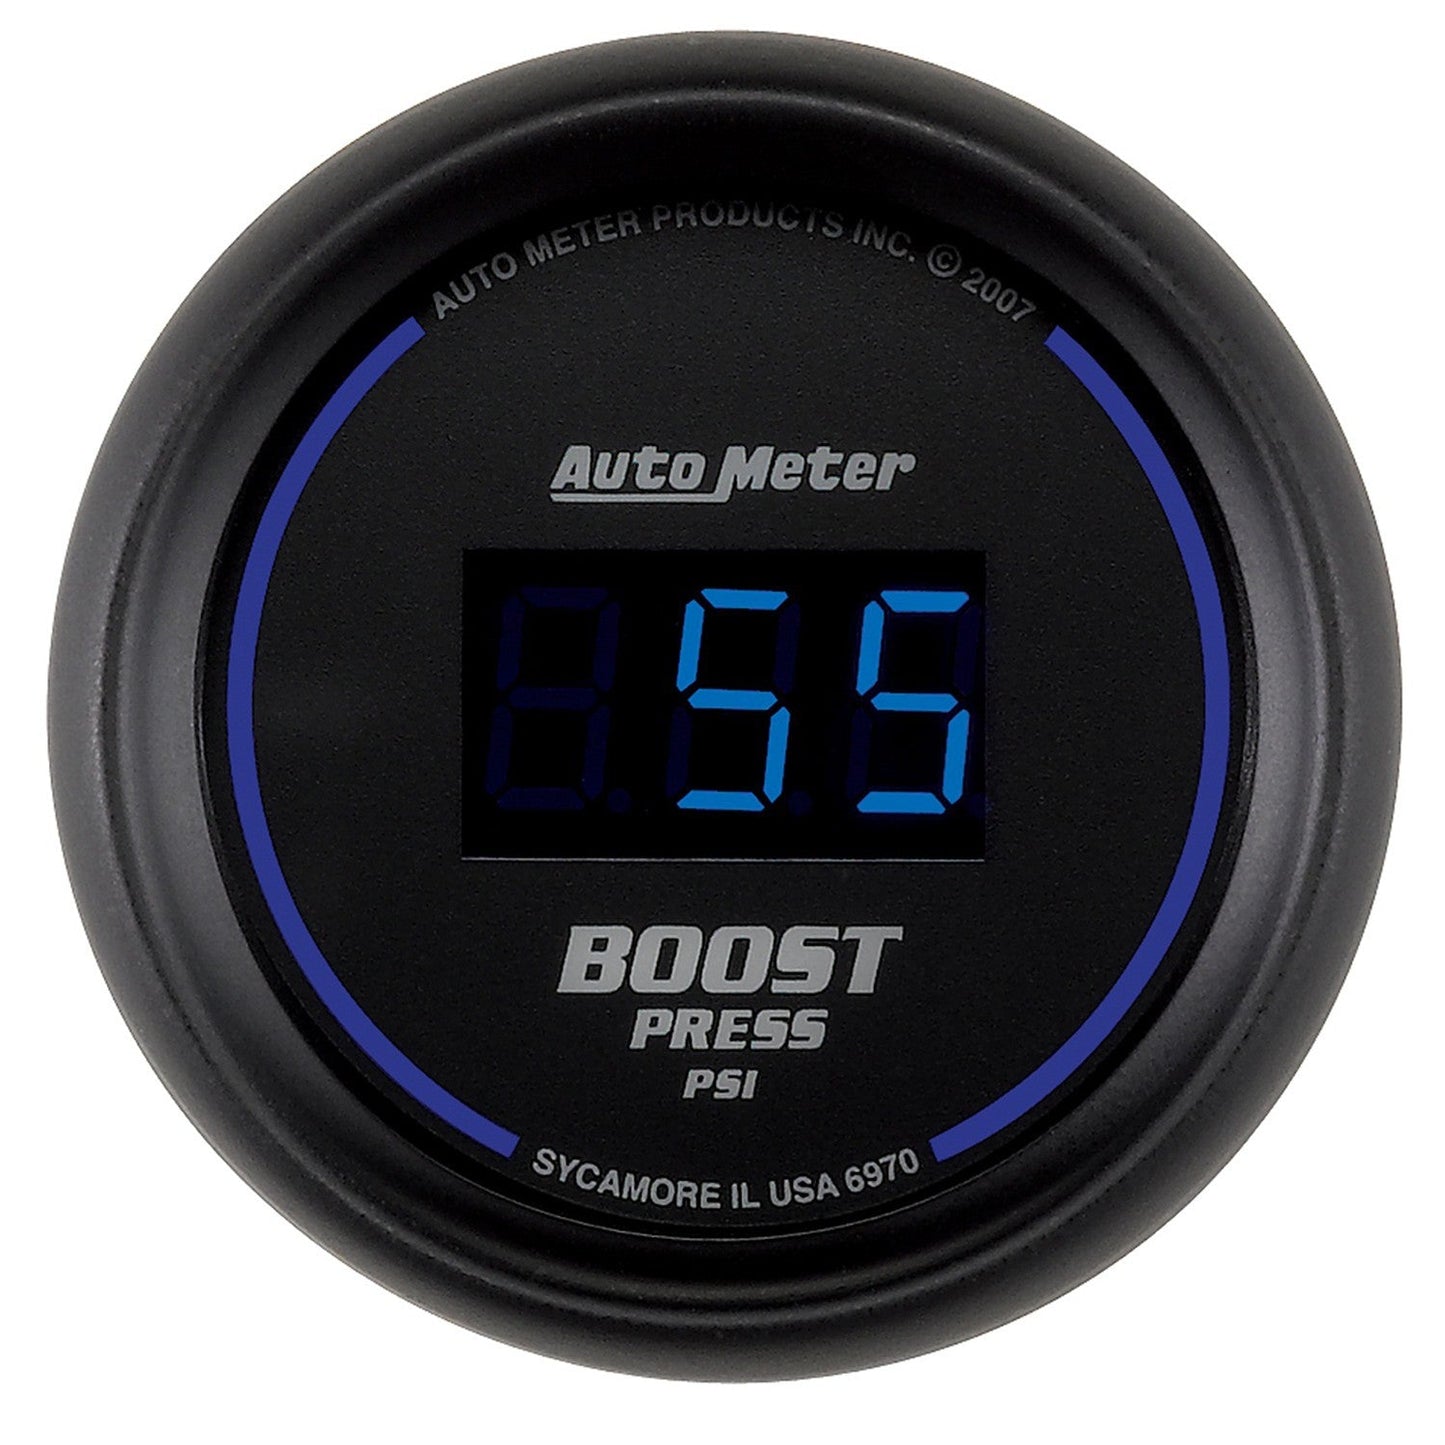 AutoMeter - 2-1/16" BOOST, 5-60 PSI, COBALT DIGITAL (6970)